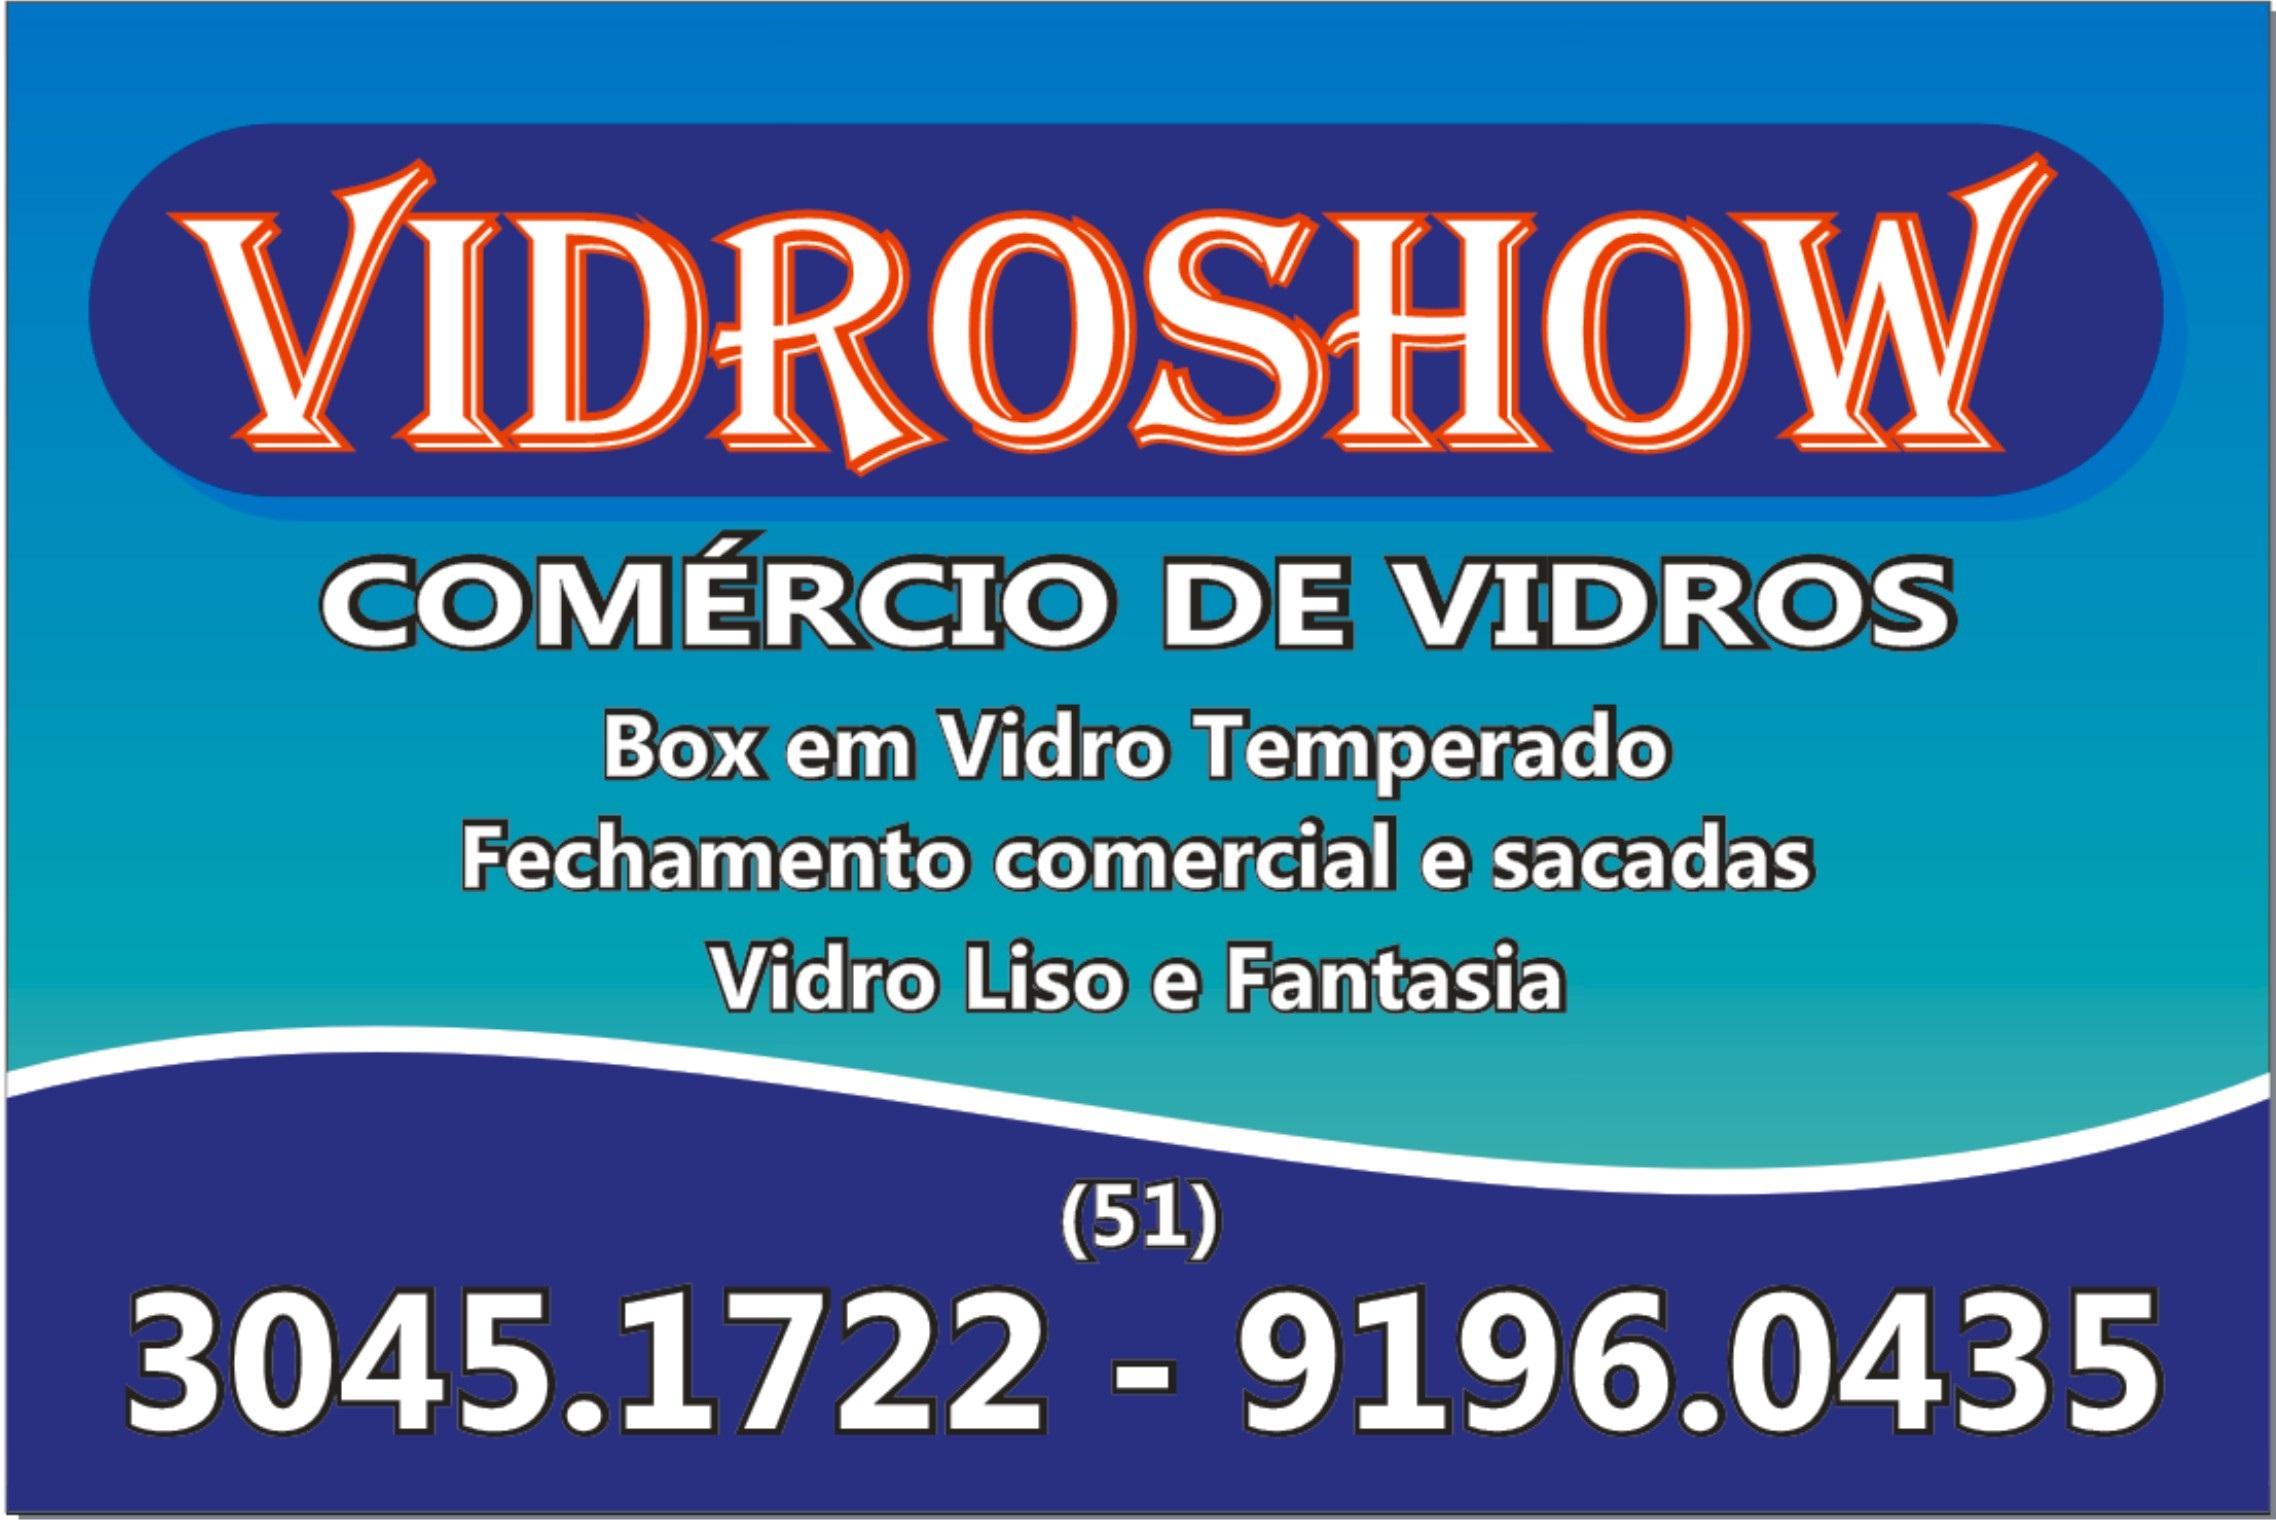 Vidroshow logo